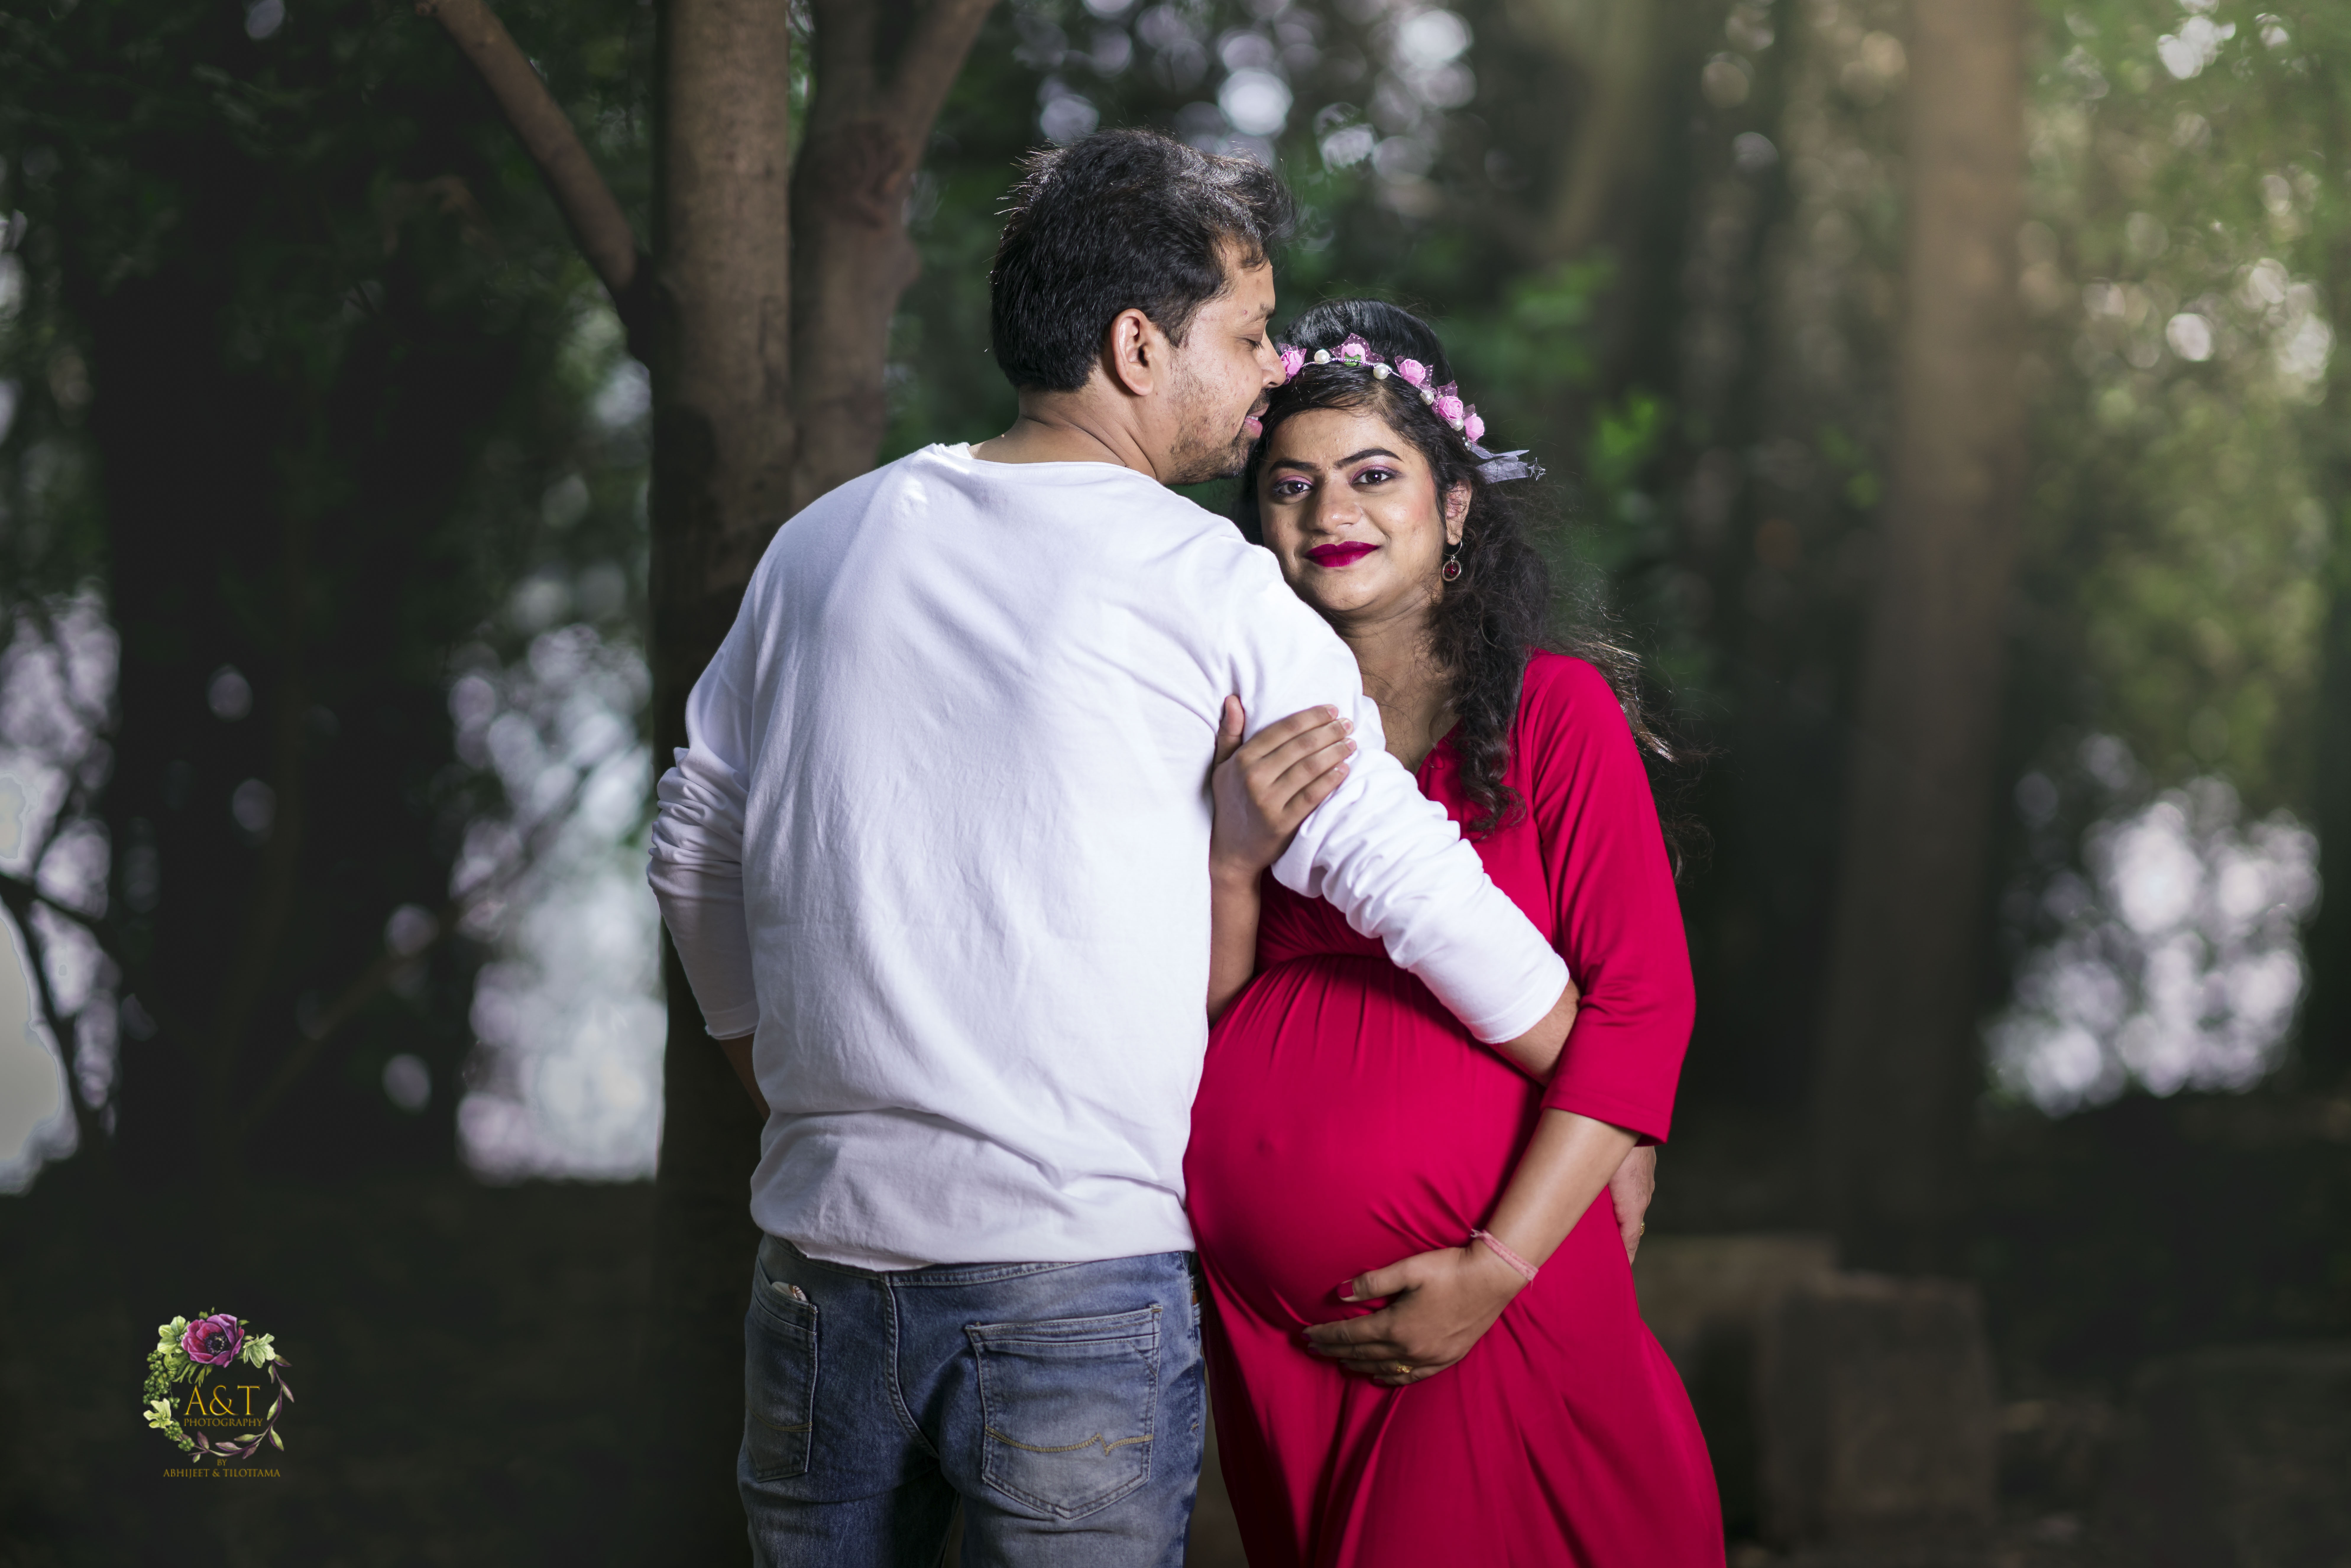 32 Stunning Couple Maternity Photoshoot Ideas and Poses